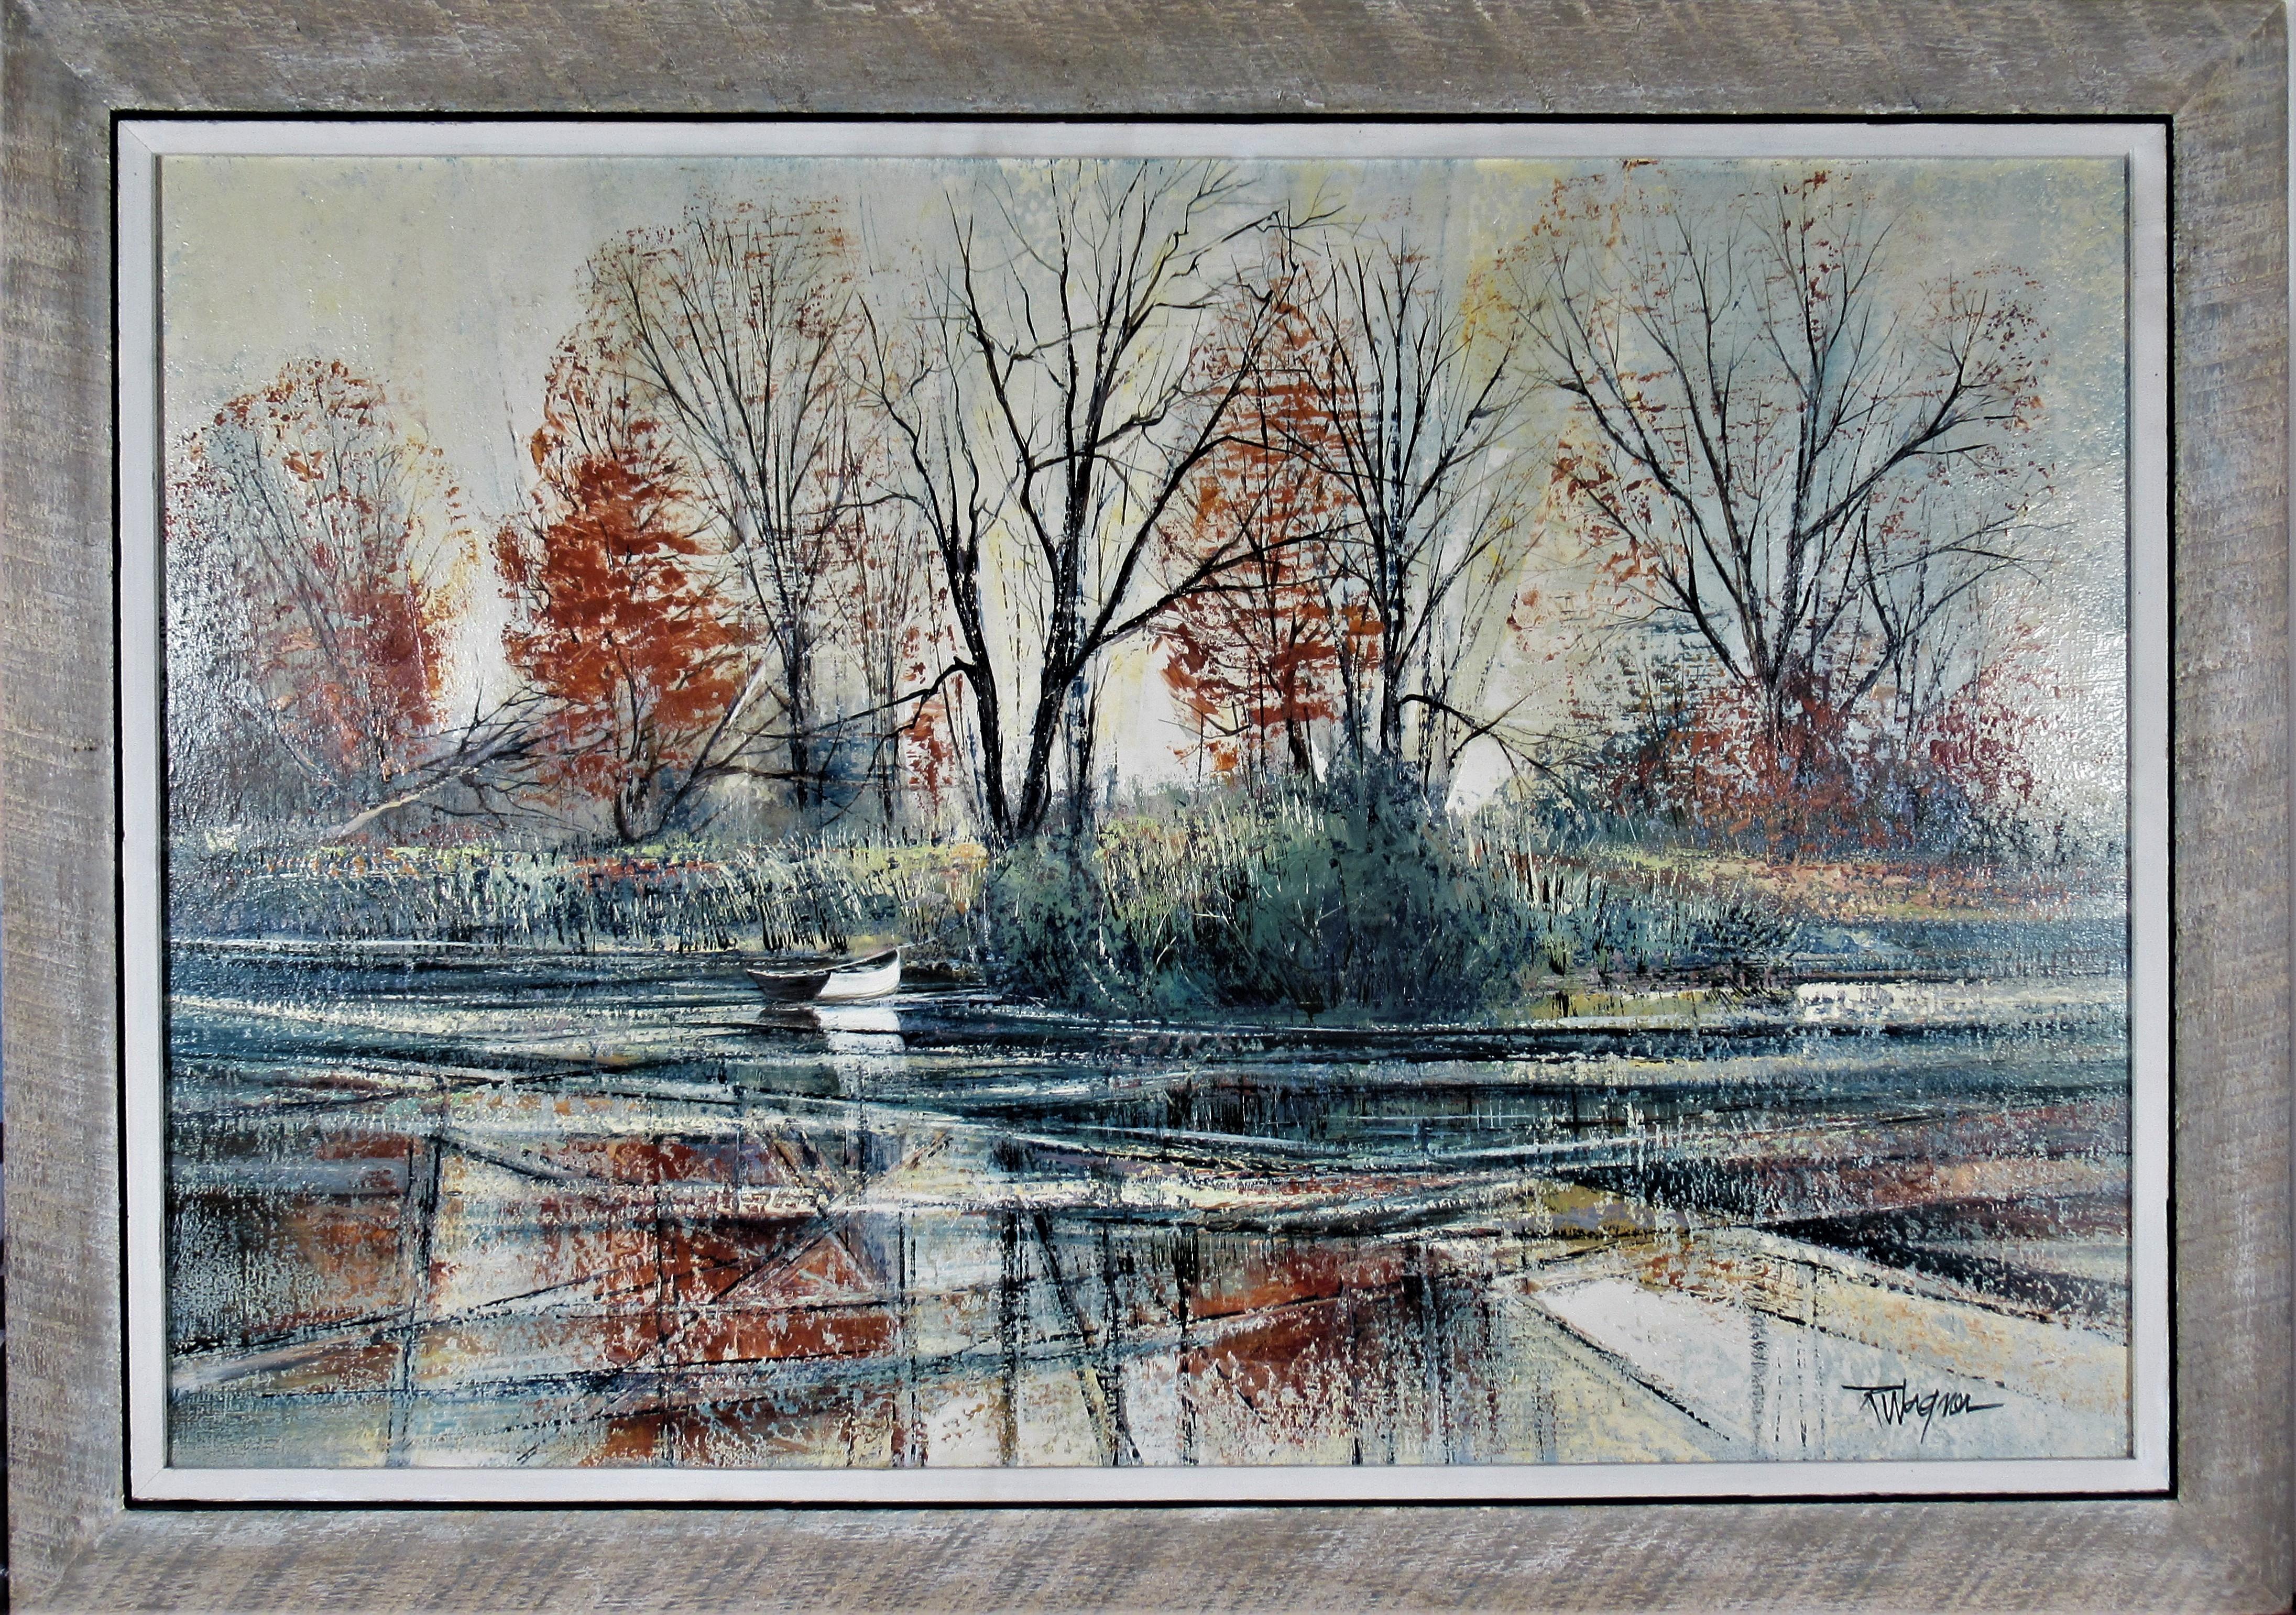 Richard Ellis Wagner Figurative Painting - Autumn River Bank